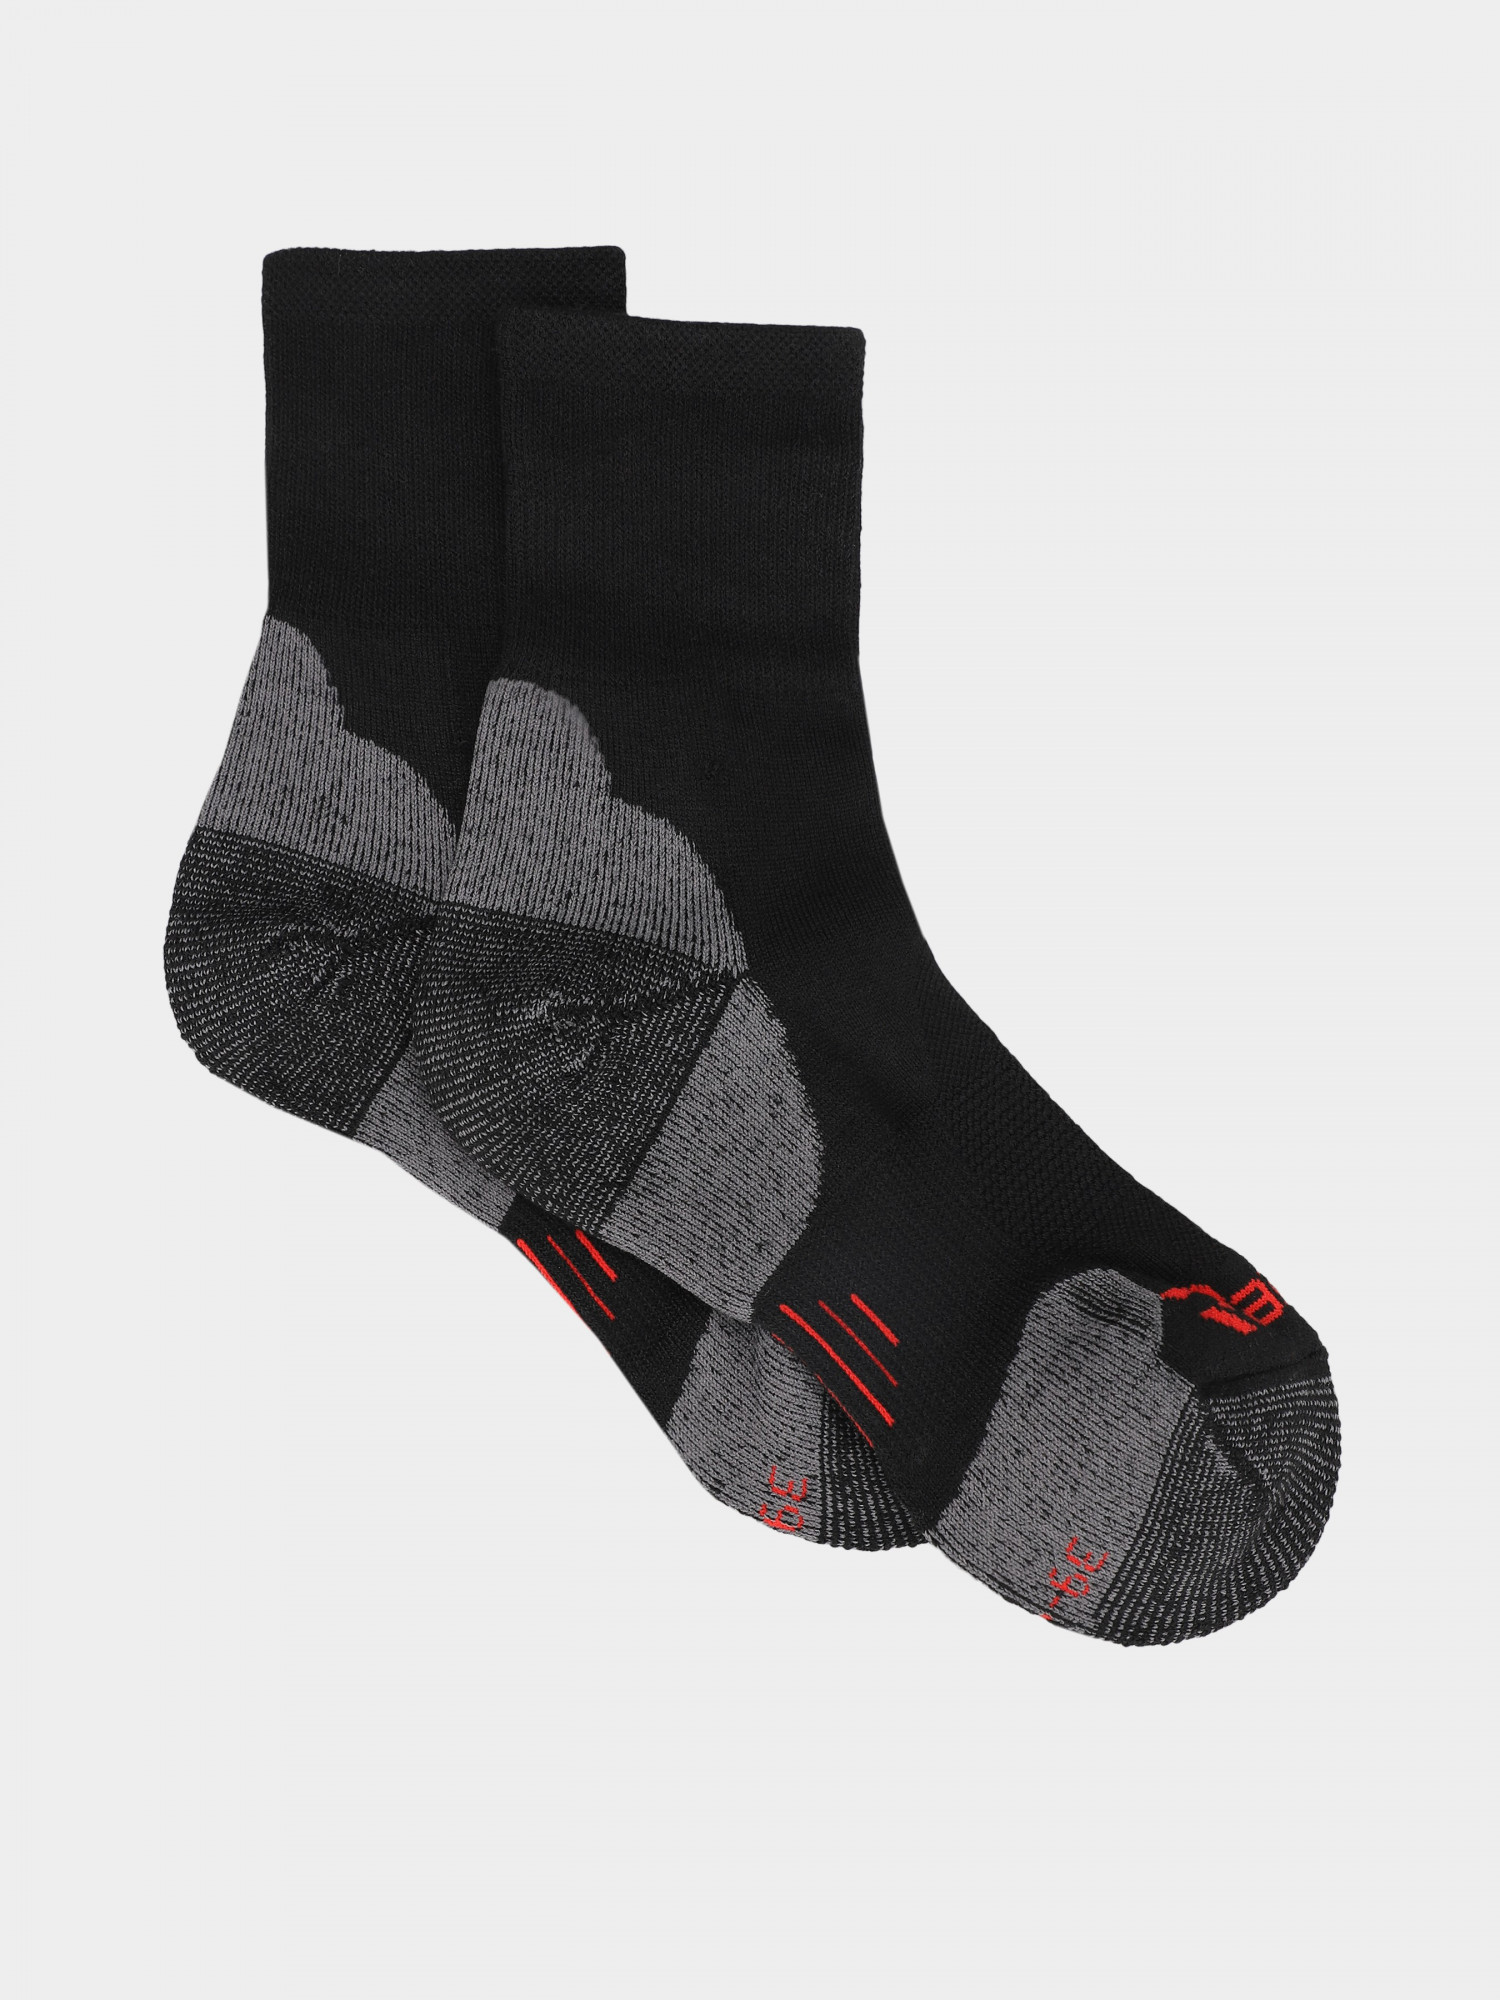 Шкарпетки Radder Hiking чорні 252405-010 изображение 3